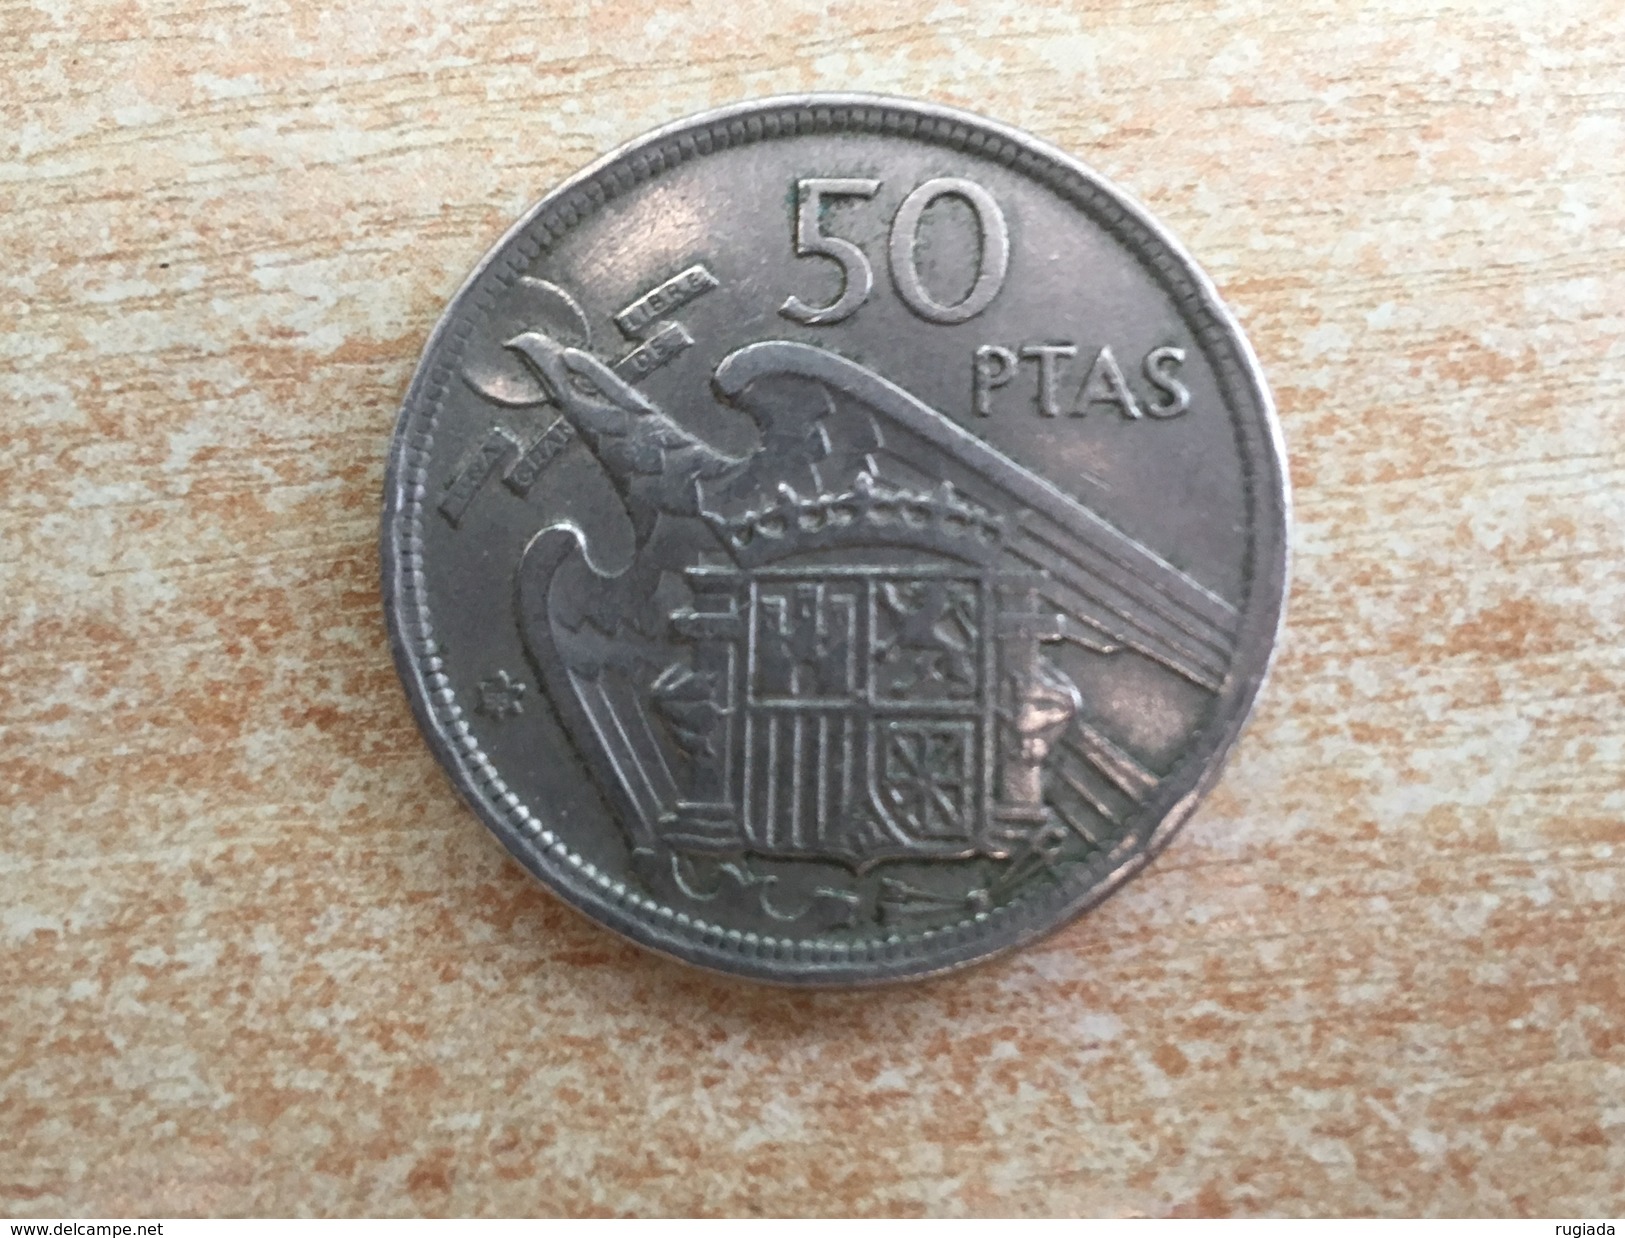 1957 (58) Spain Espana 50 Pesetas Coin,  UNA GRANDE LIBRE On Edge - VF/Ex Very Fine, Ex Fine - 50 Pesetas